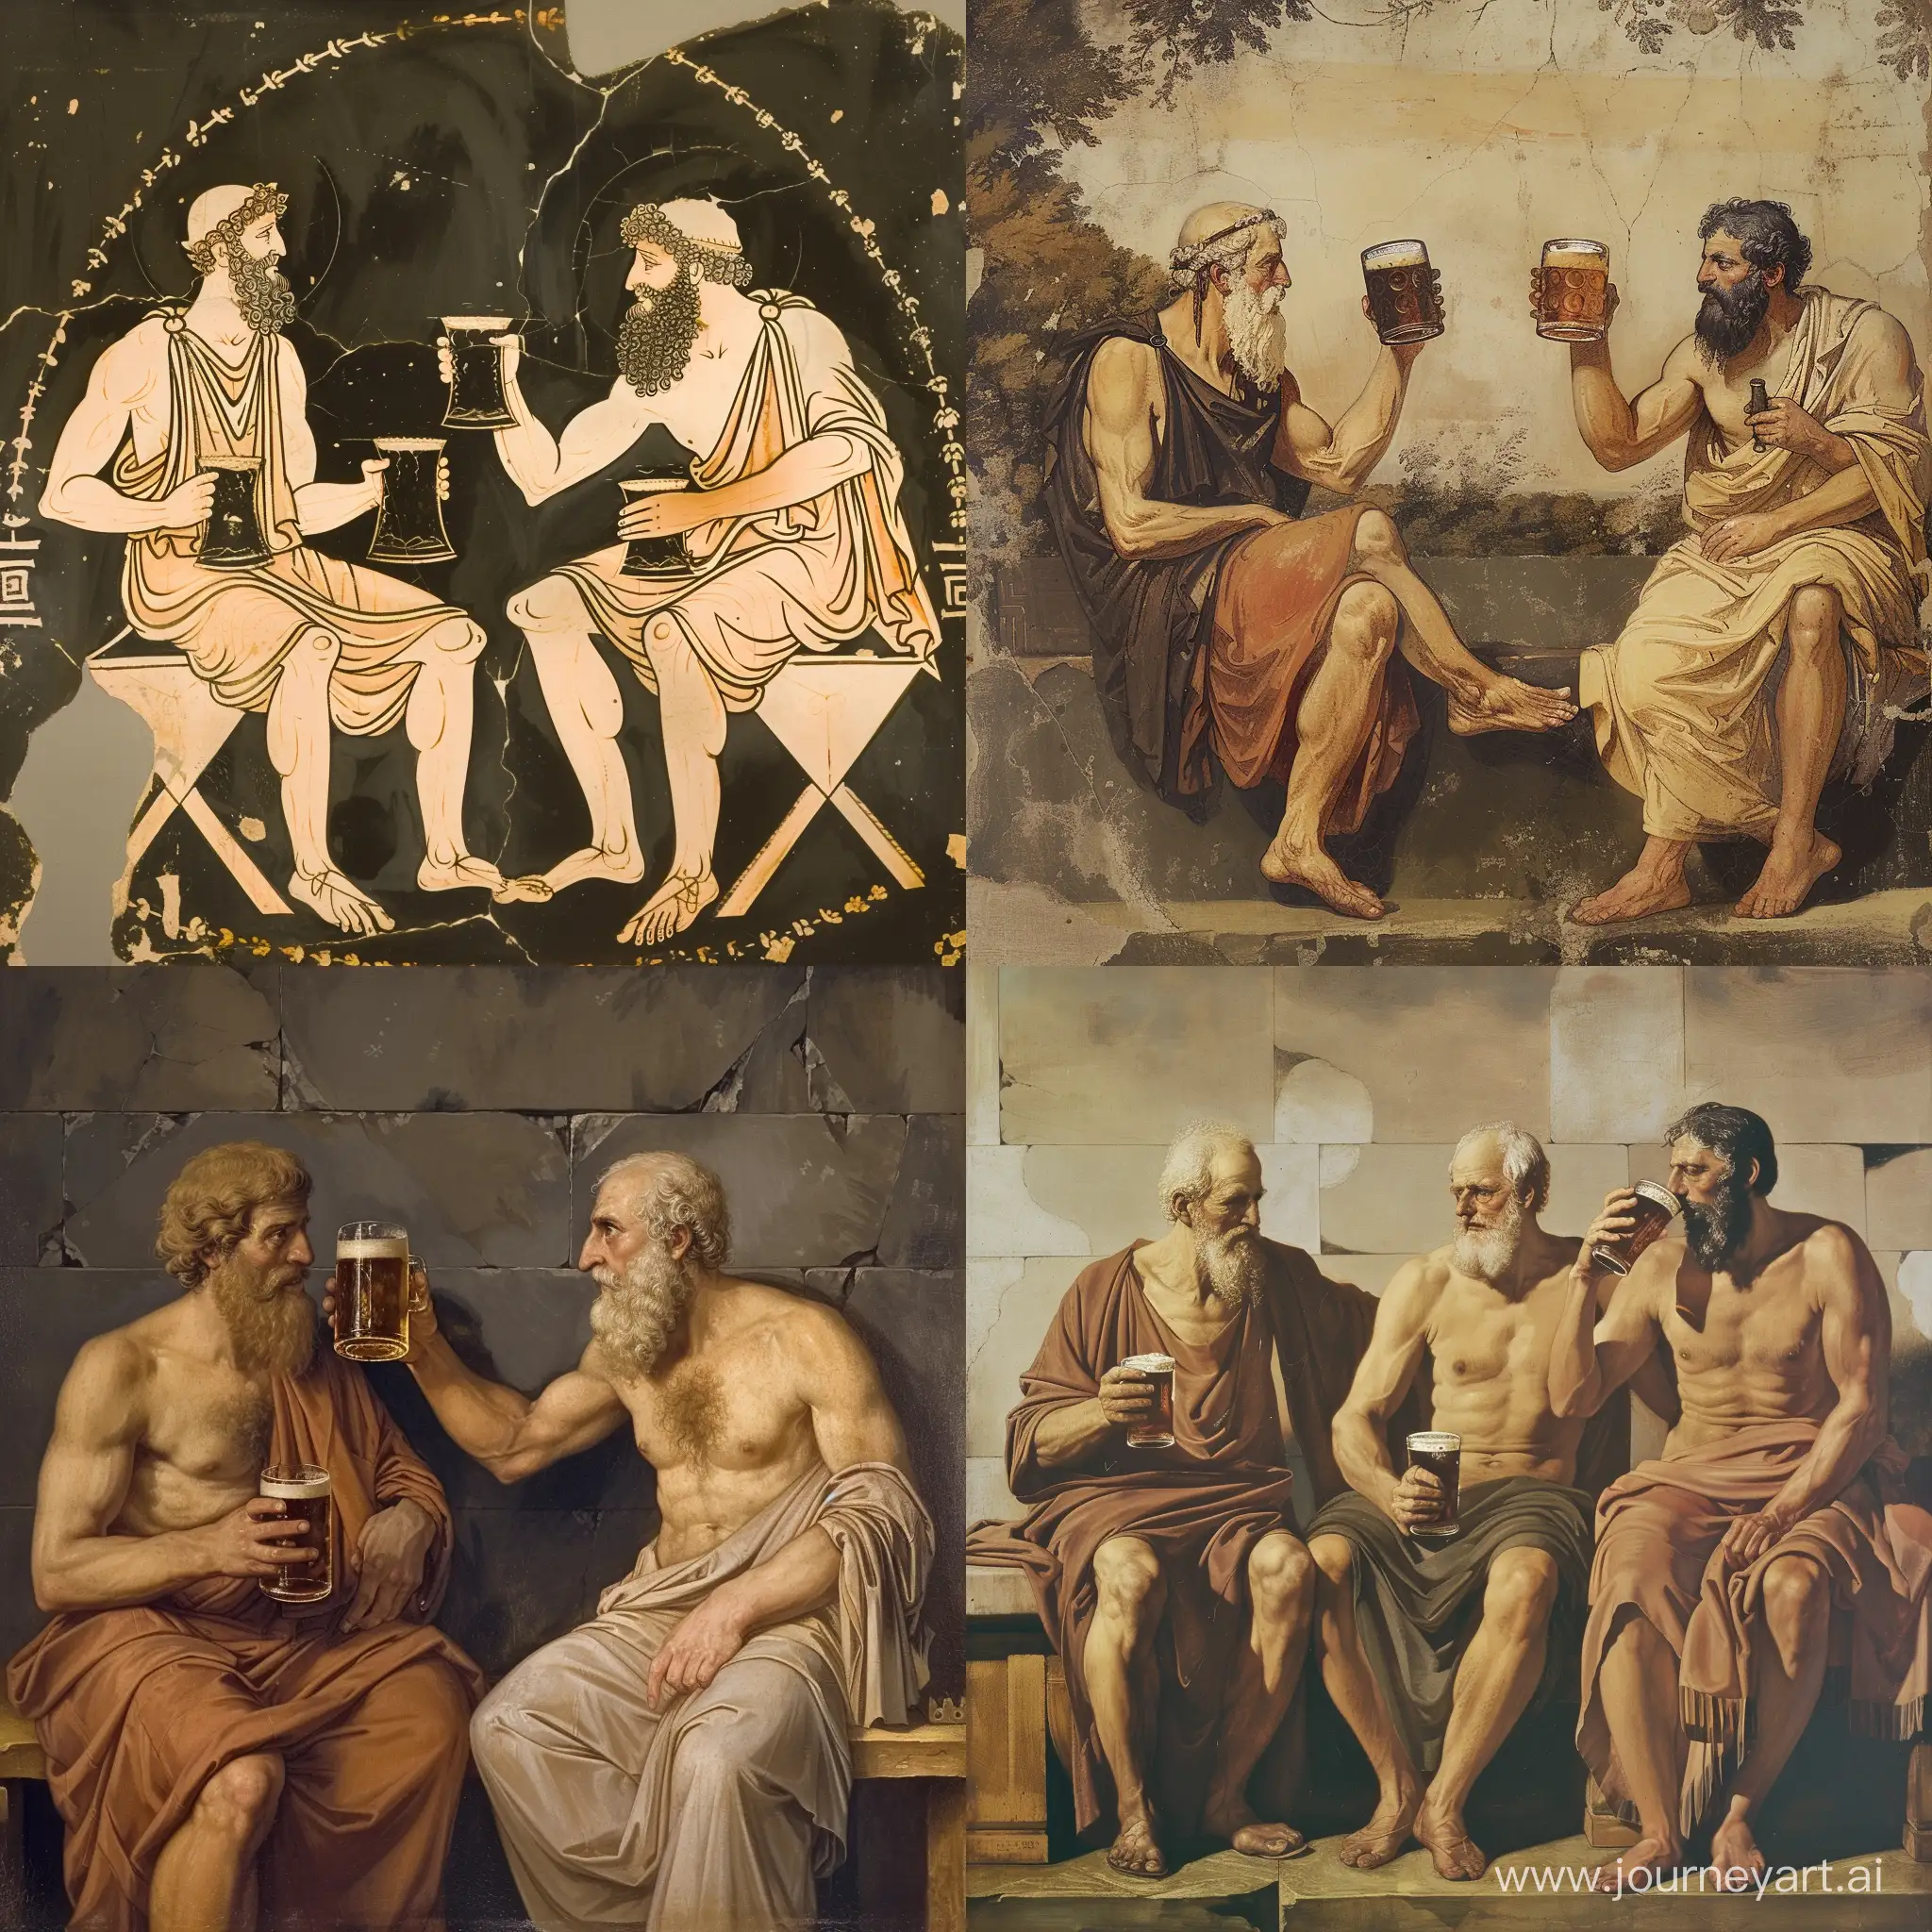 Ancient-Greek-Philosophers-Enjoying-Beer-Drinking-Session